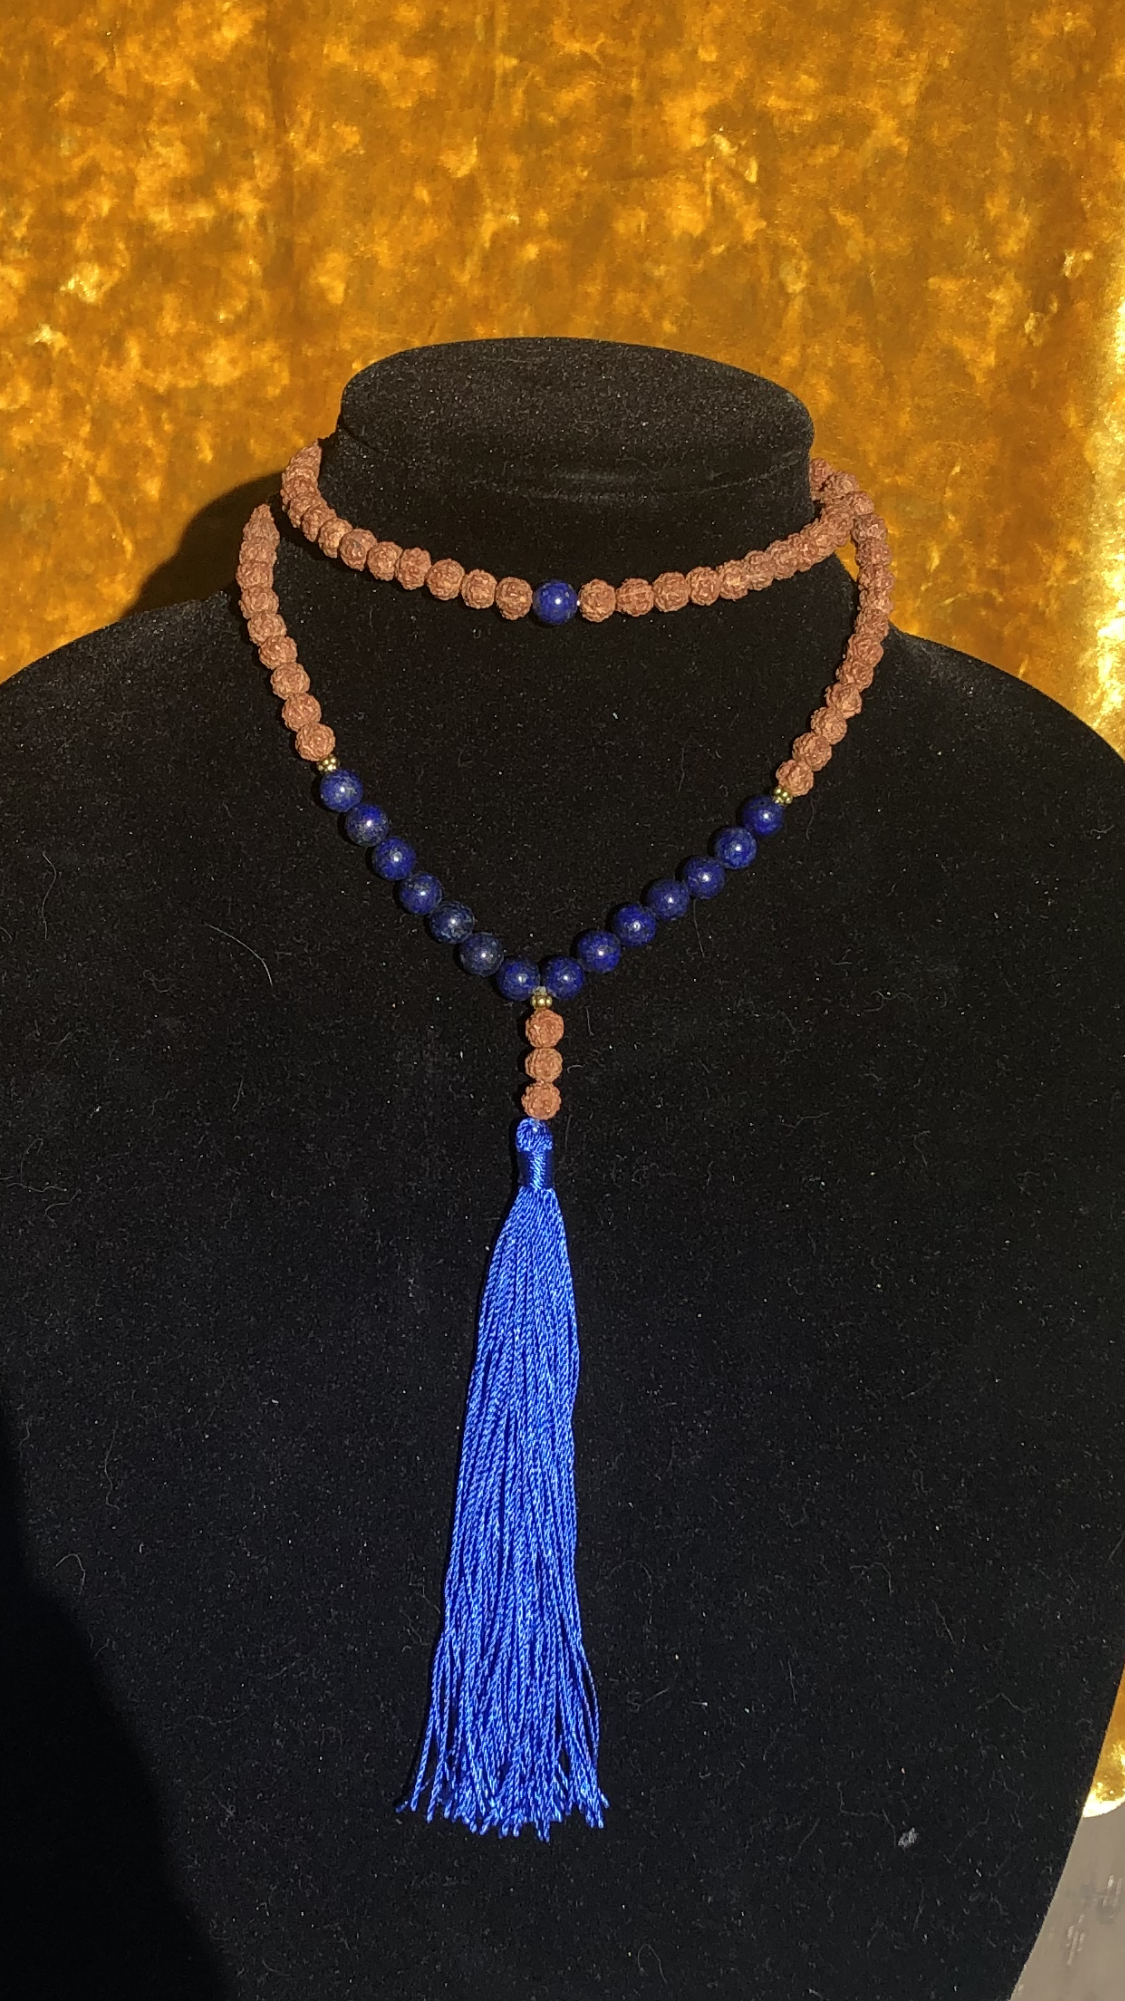 Inner Truth Rudraksha Bead Necklaces Lapis Lazuli 108 Mala with tassel